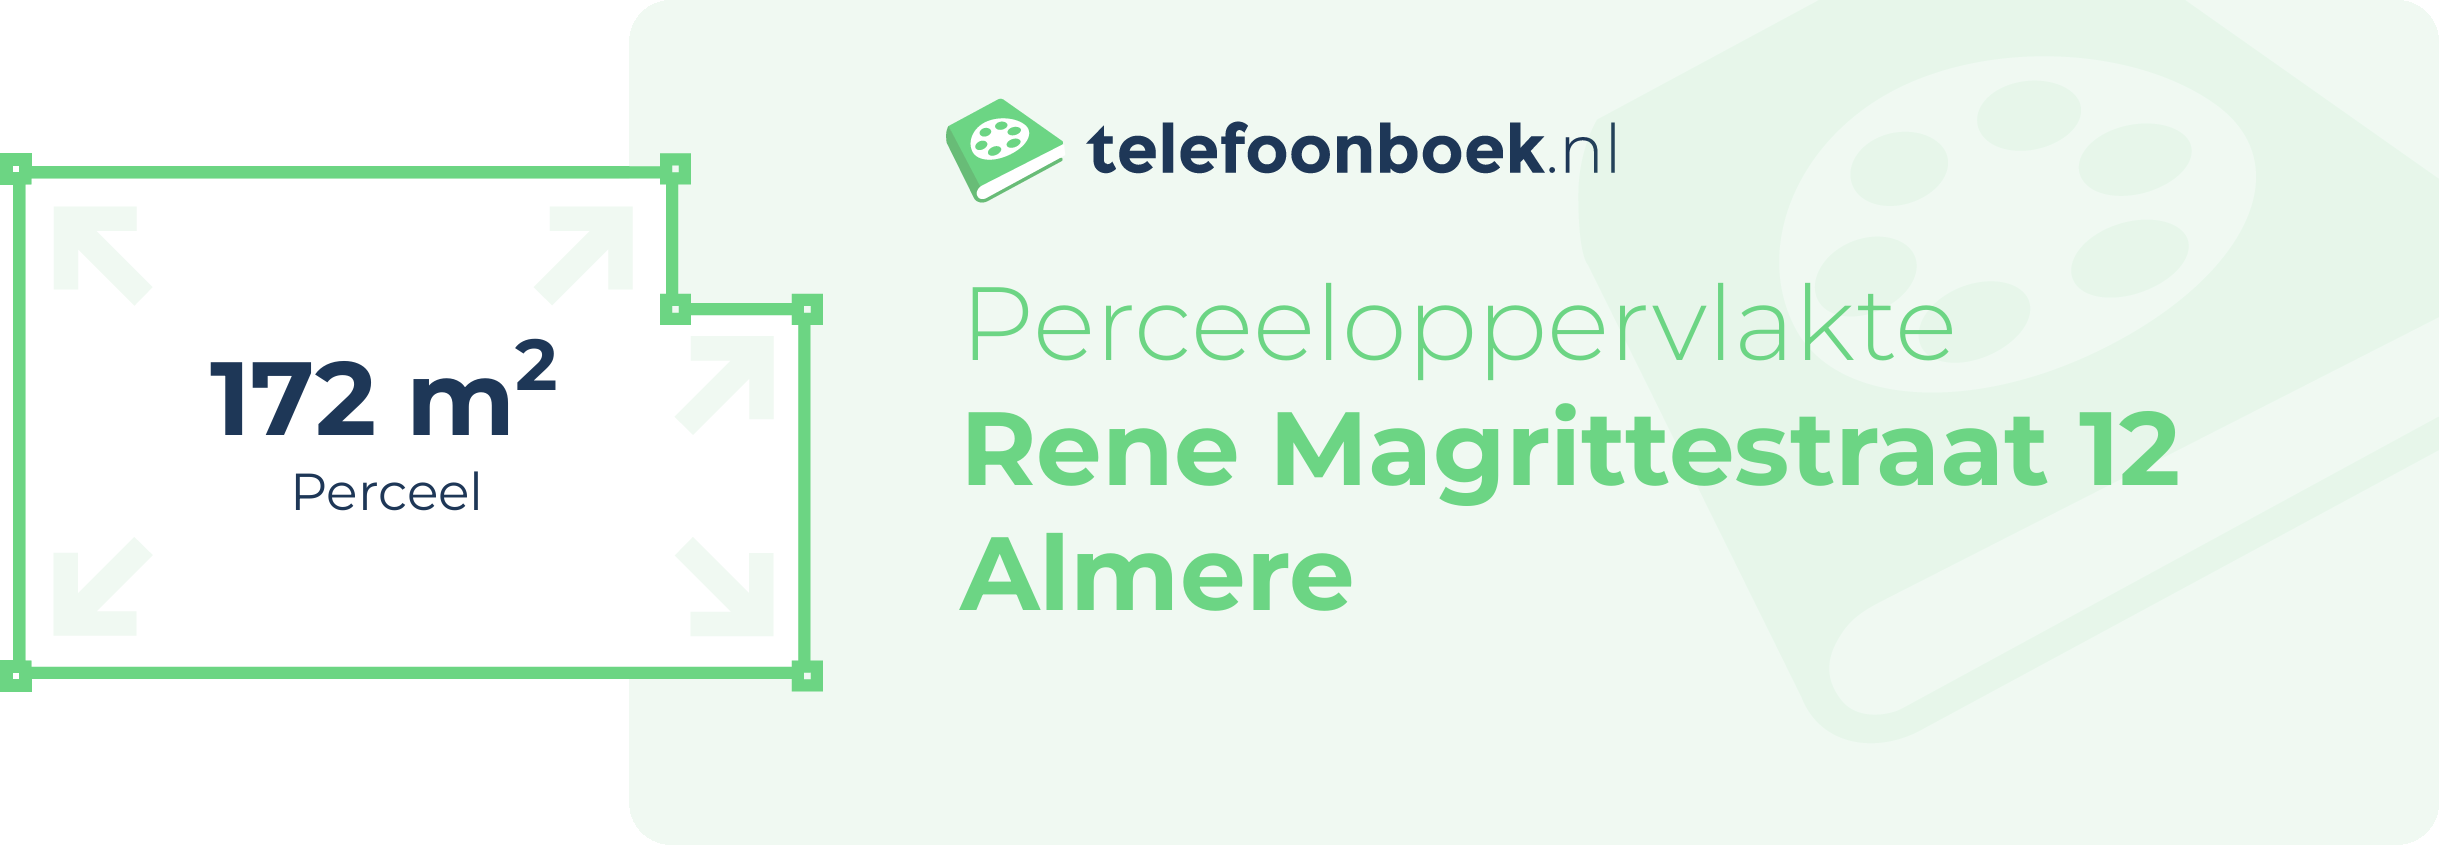 Perceeloppervlakte Rene Magrittestraat 12 Almere